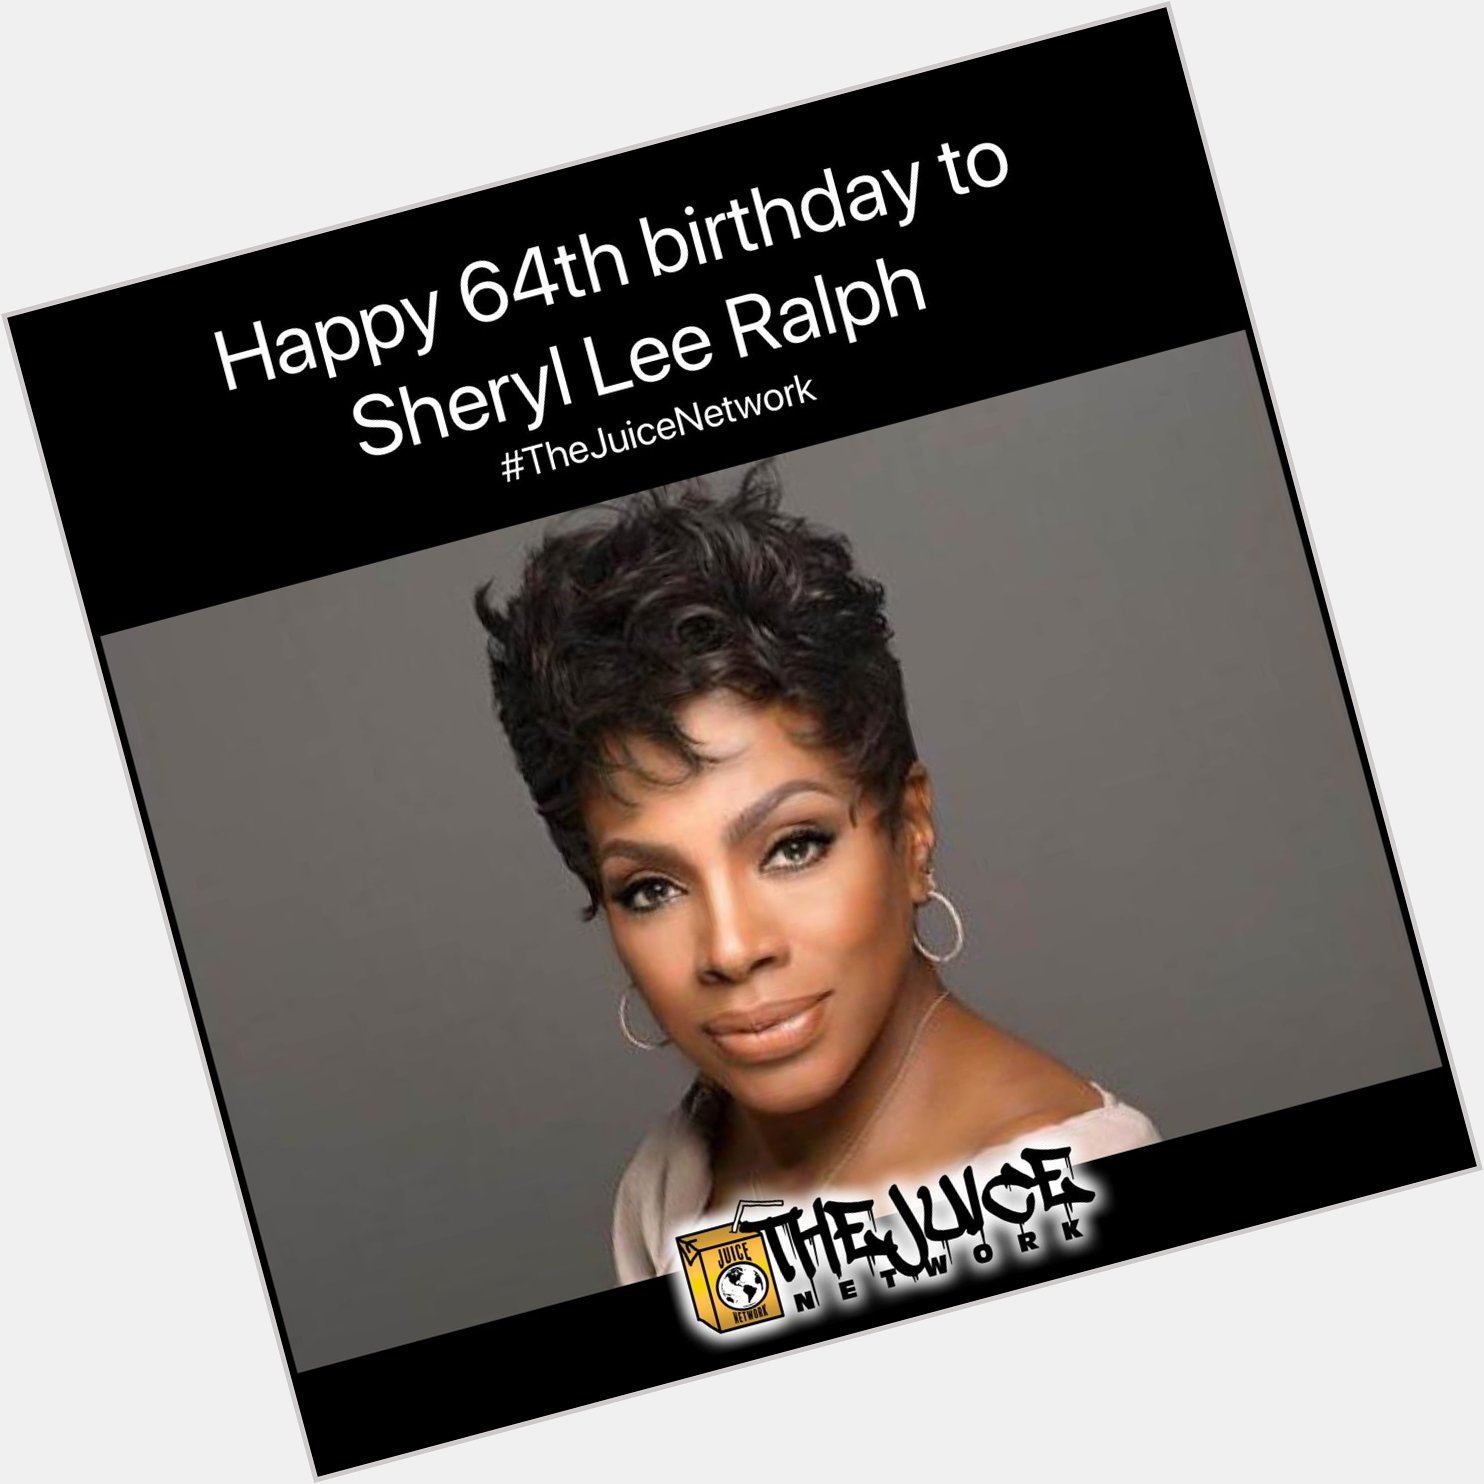 Wishing the beautiful Sheryl Lee Ralph a happy birthday!      